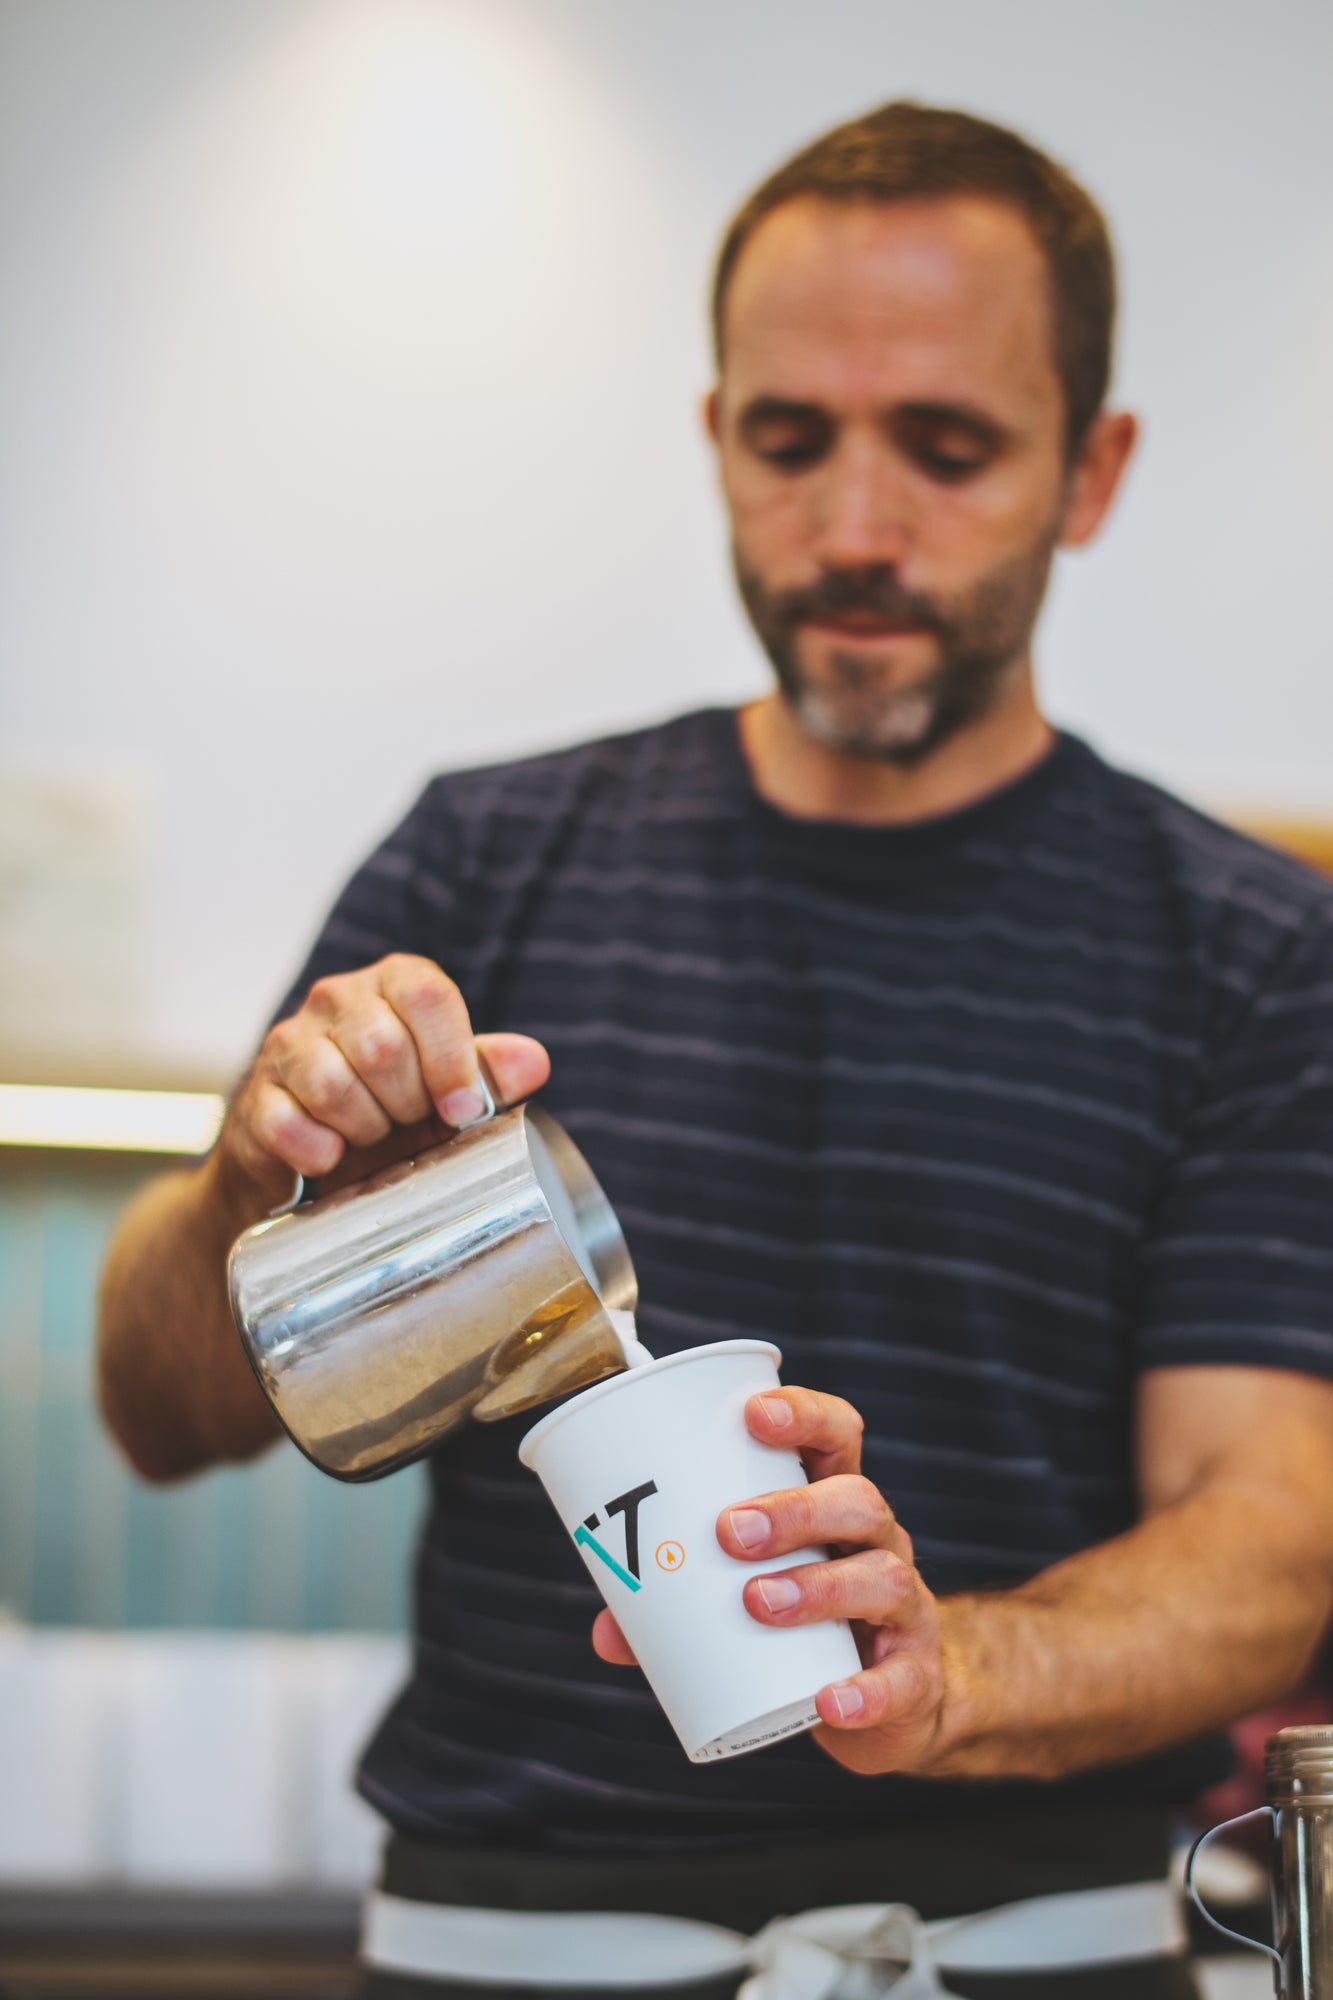 Verve co-founder, Ryan O'Donovan, pouring lattes